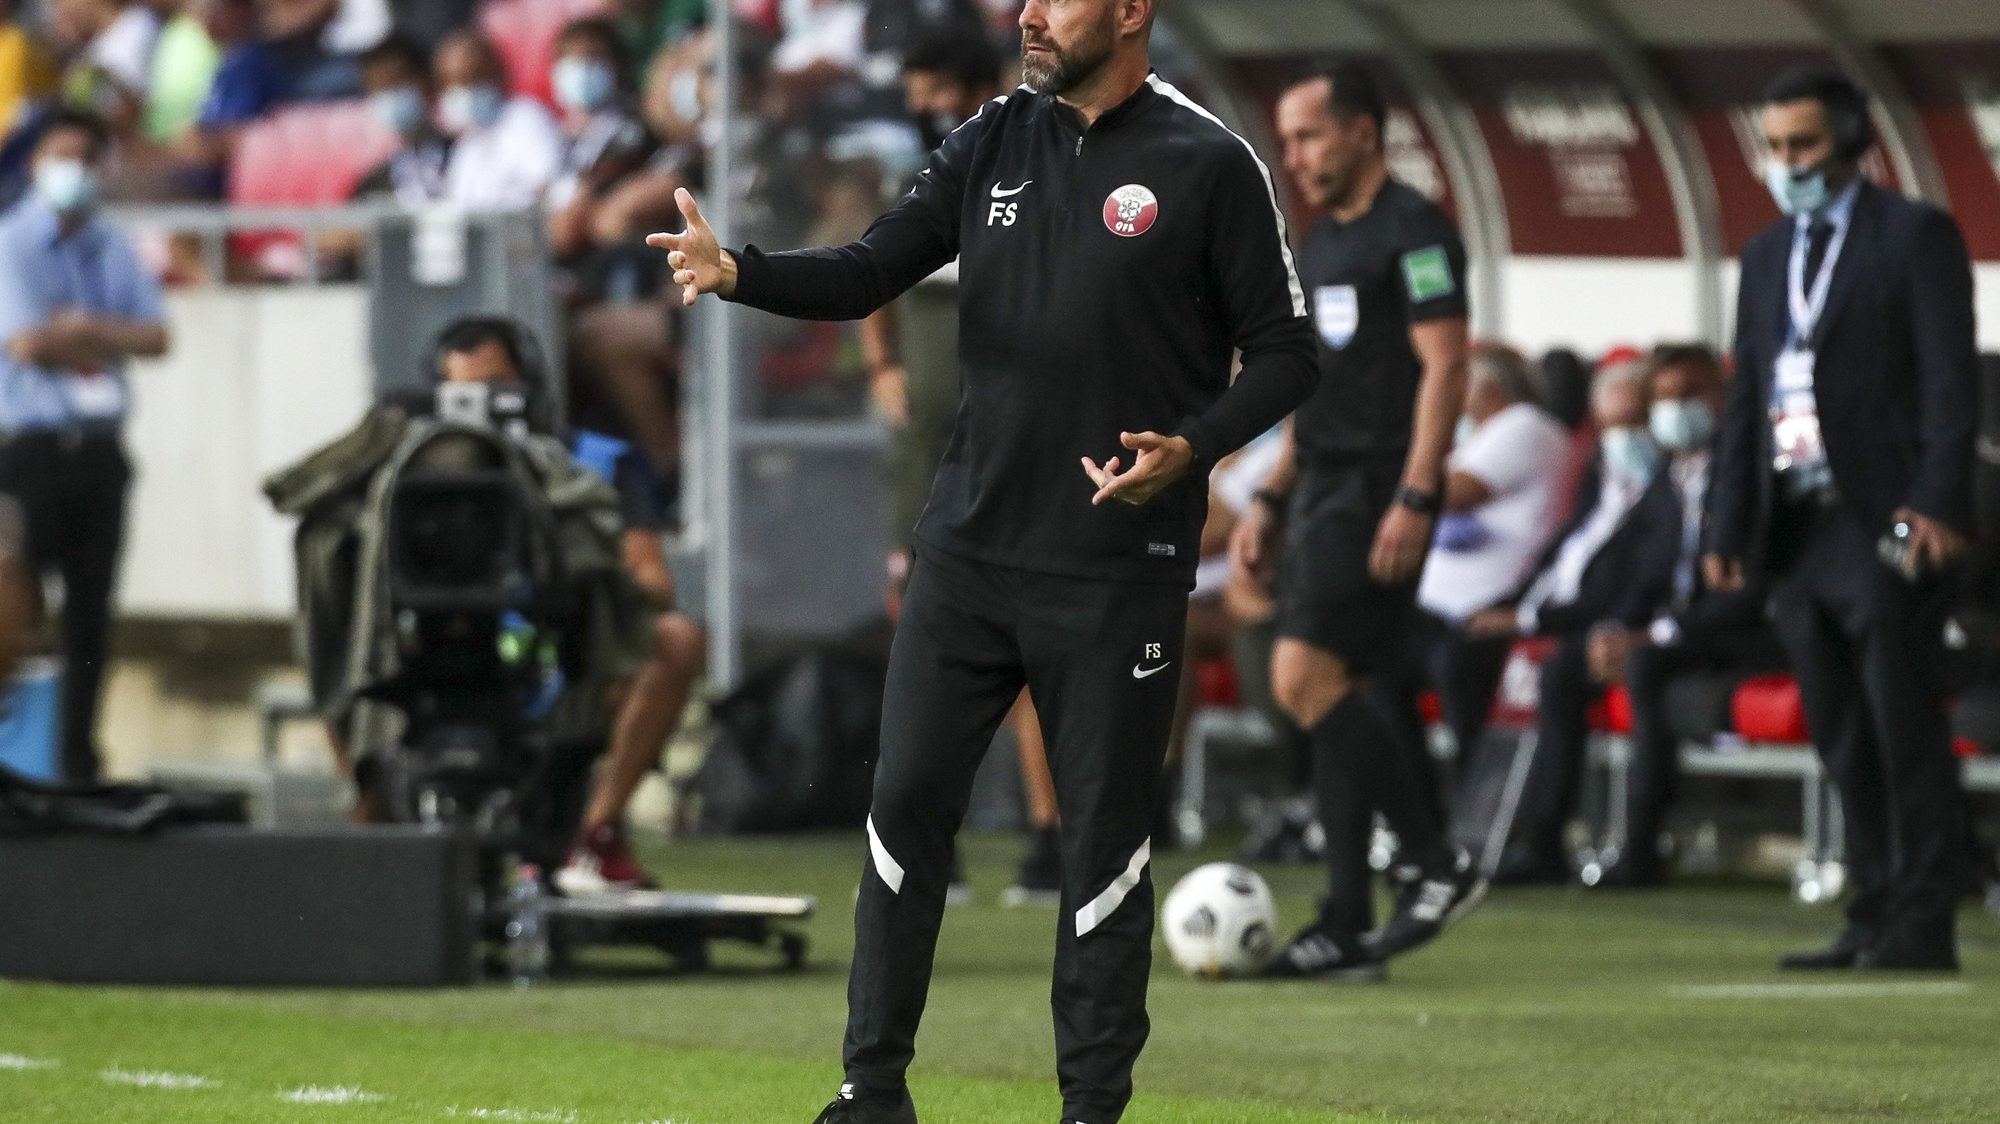 Qatar&#039;s head coach Felix Sanchez reacts during the friendly soccer match between Qatar and Portugal held at Nagyerdei stadium in Debrecen, Hungary, 04 September 2021. PAULO NOVAIS/LUSA